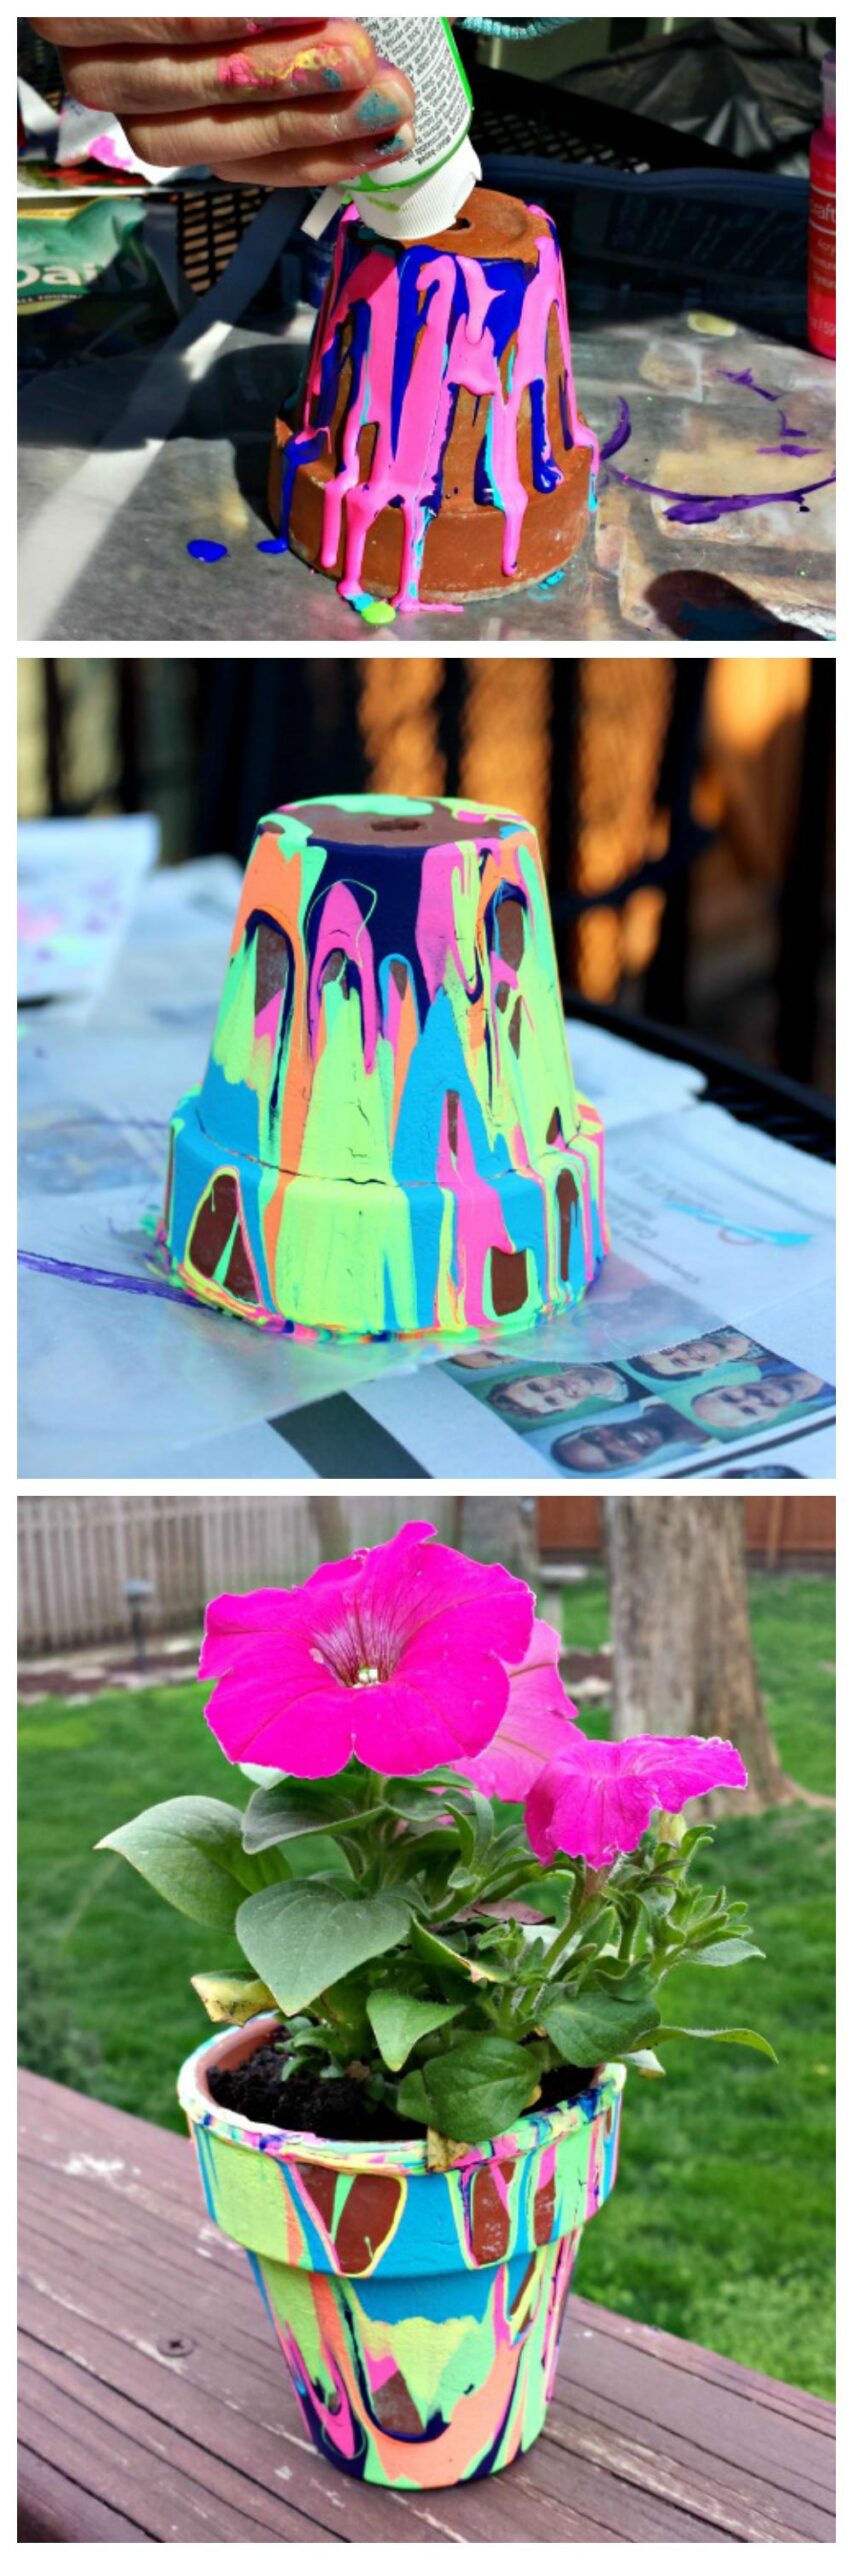 Wonderful DIY gift idea for teacher appreciation or Mother's Day